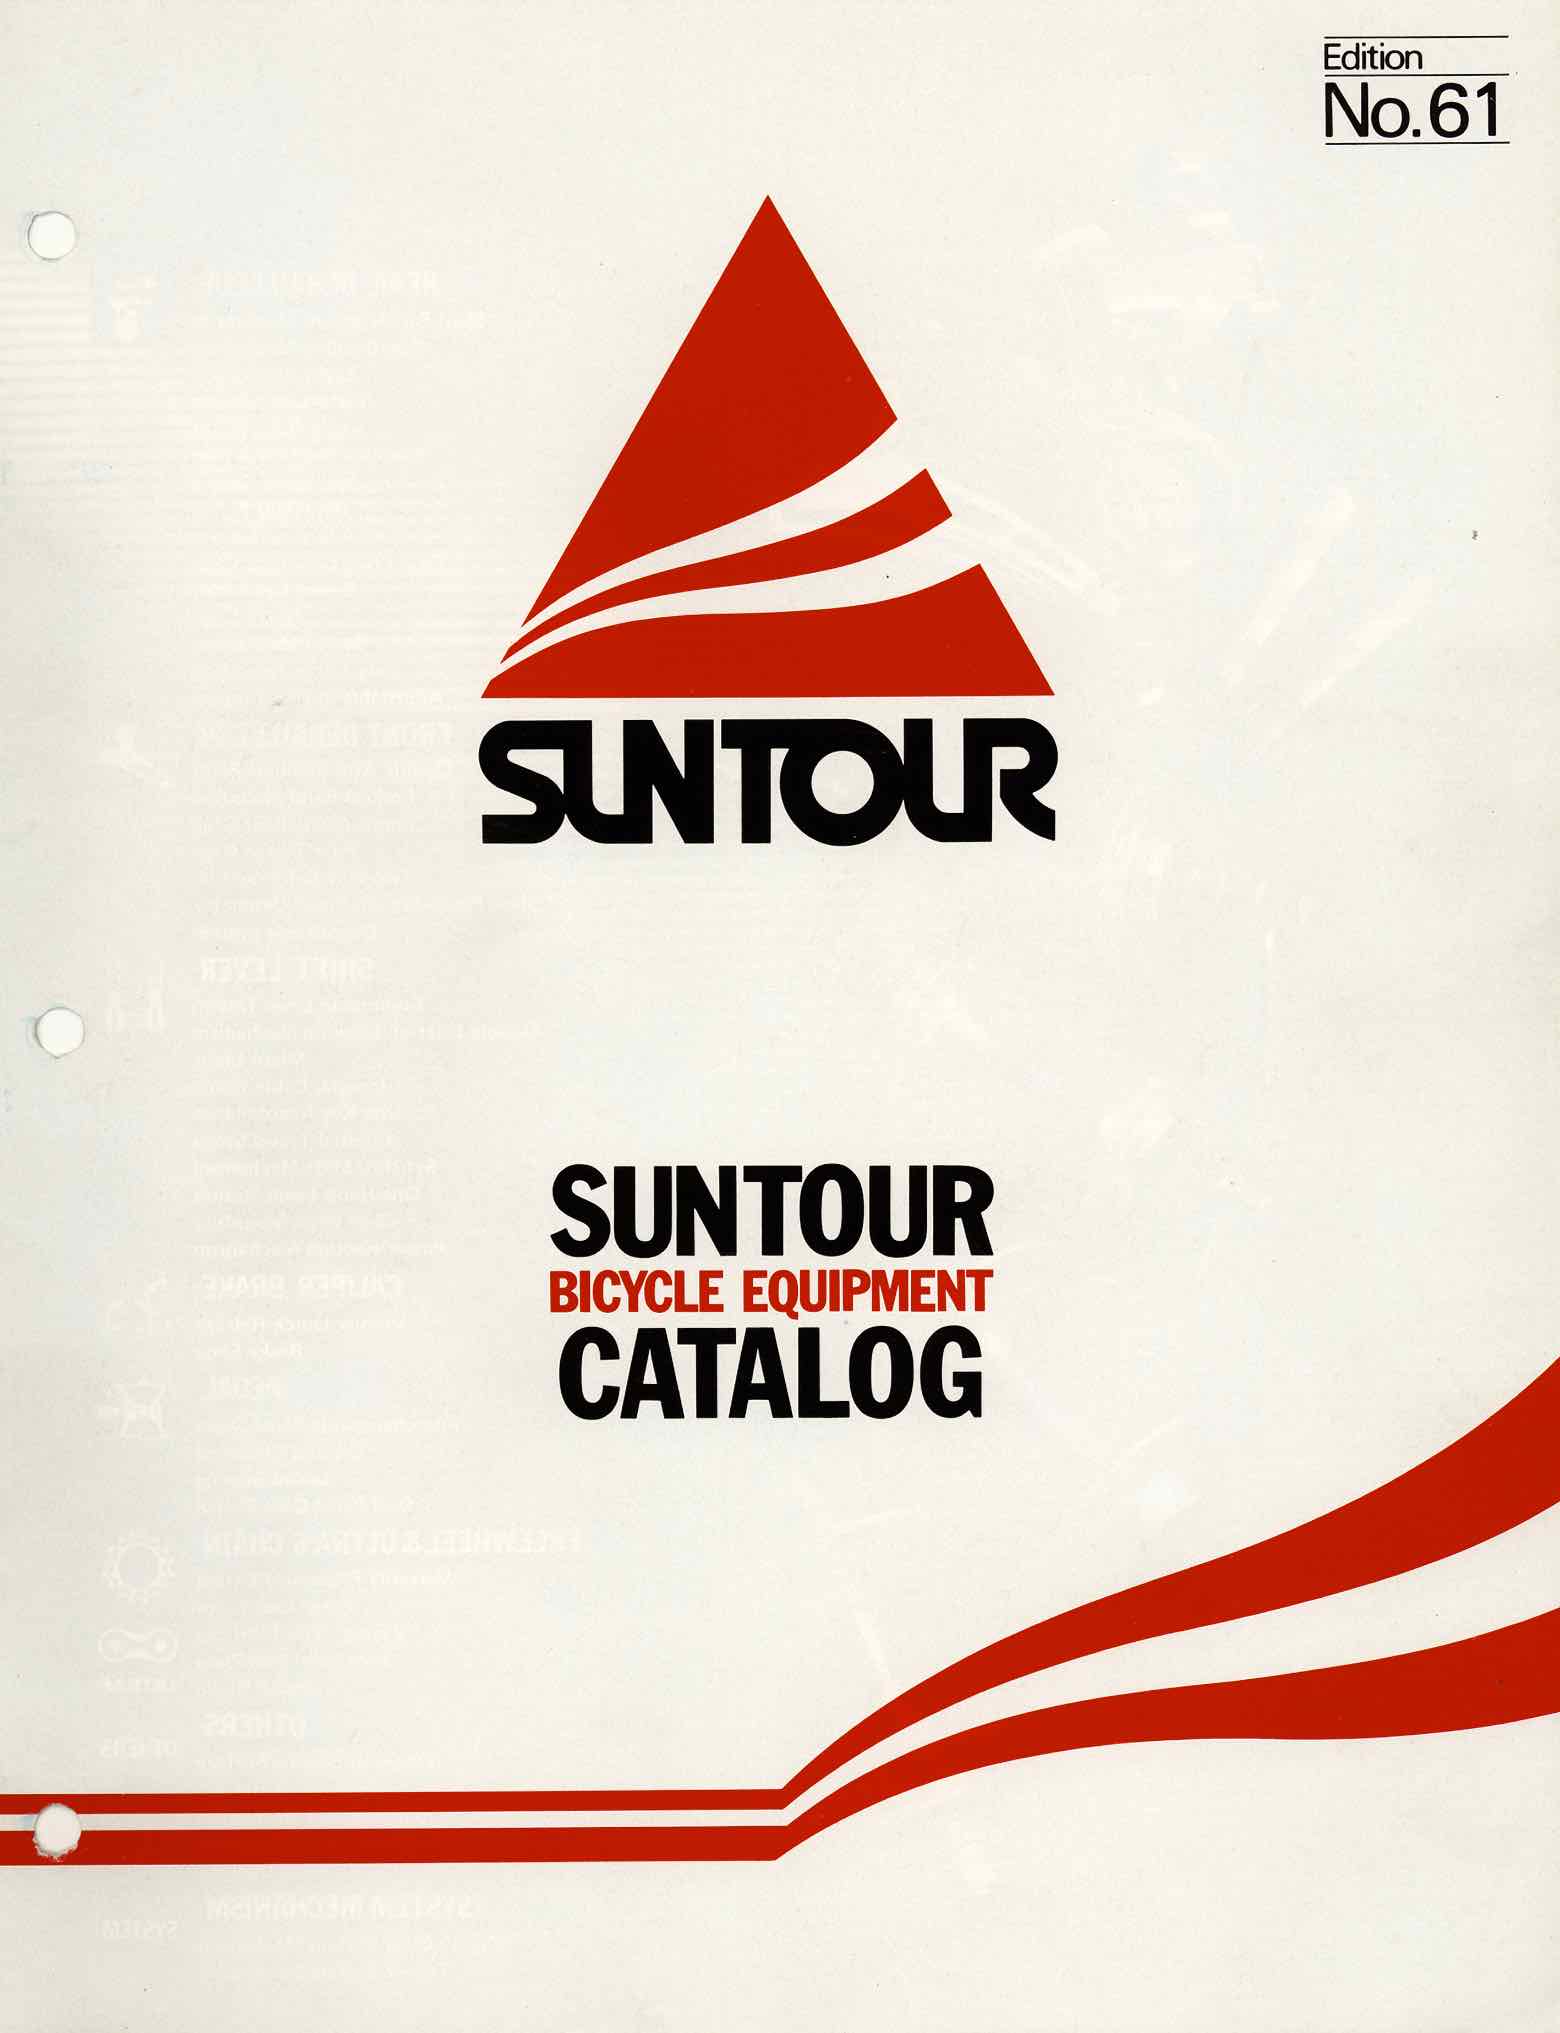 SunTour Bicycle Equipment Catalog No 61 - Front cover main image